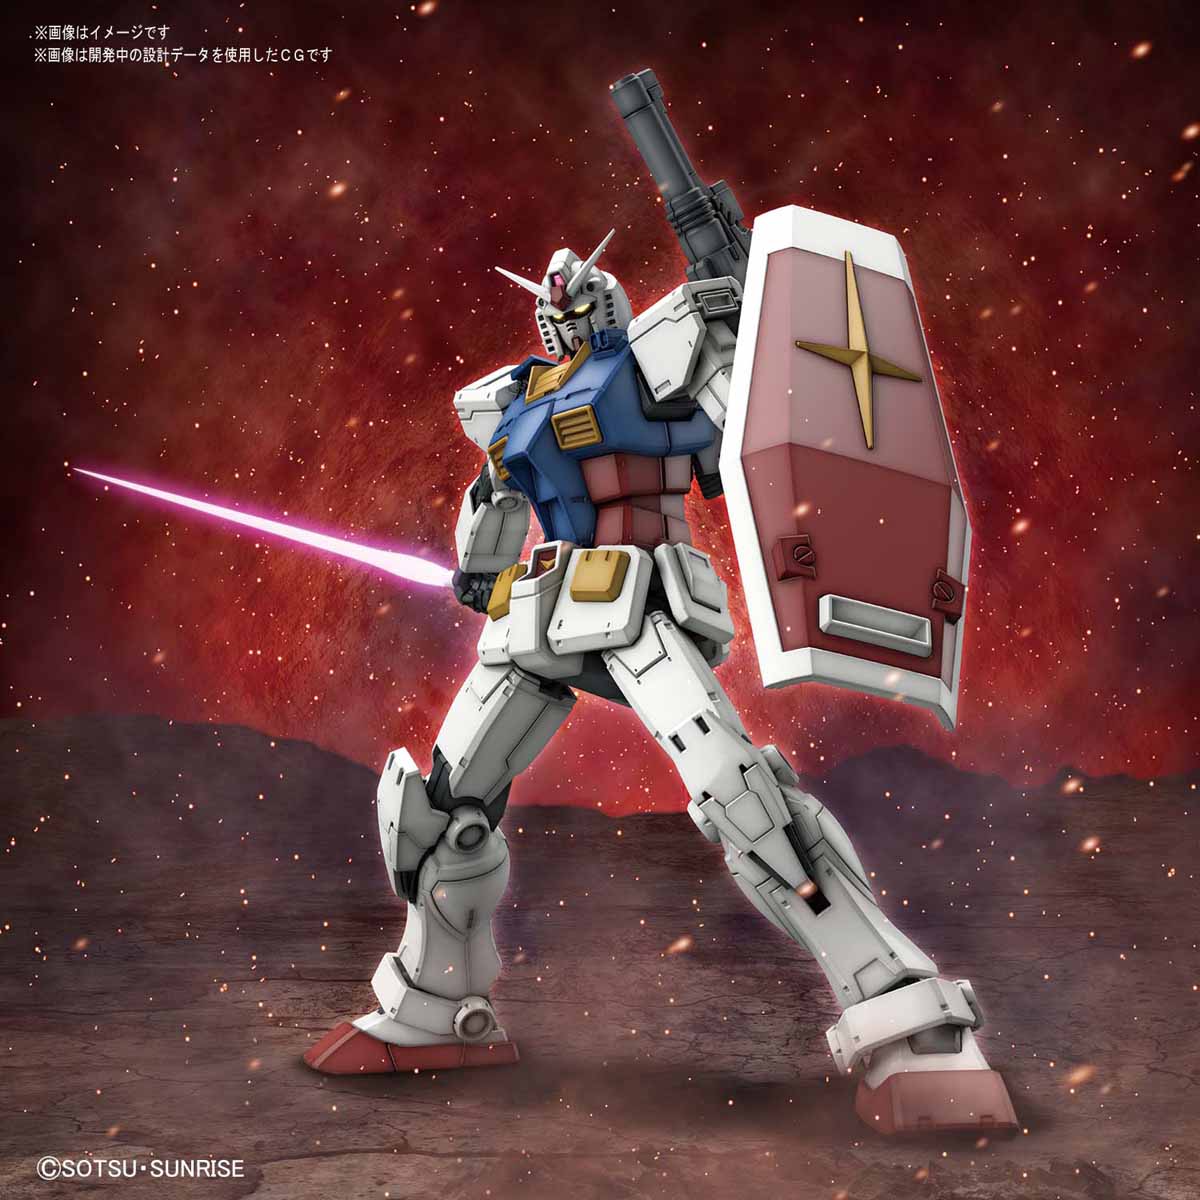 HG026 RX-78-02 Gundam (Gundam The Origin Ver.)